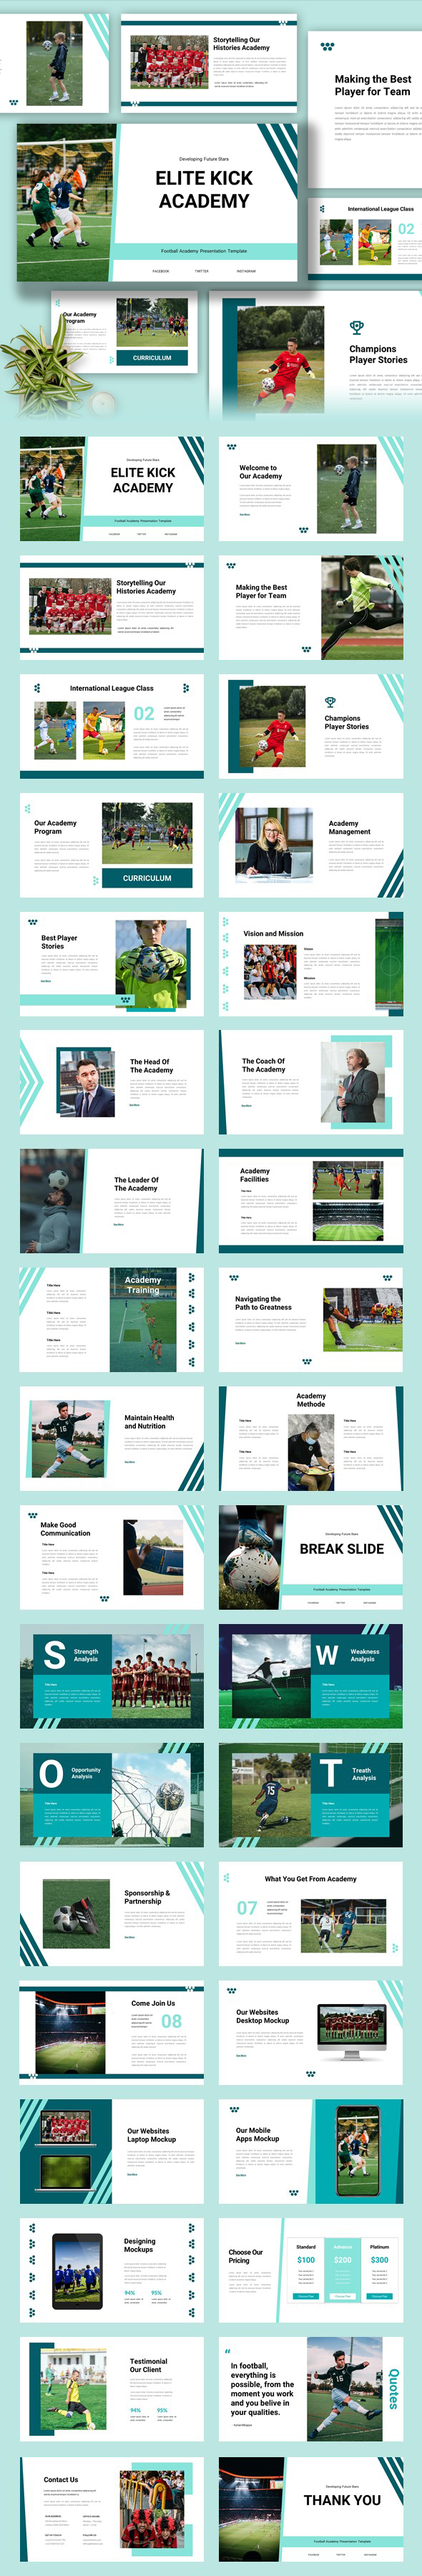 [DOWNLOAD]Elite - Football Academy Google Slides Template